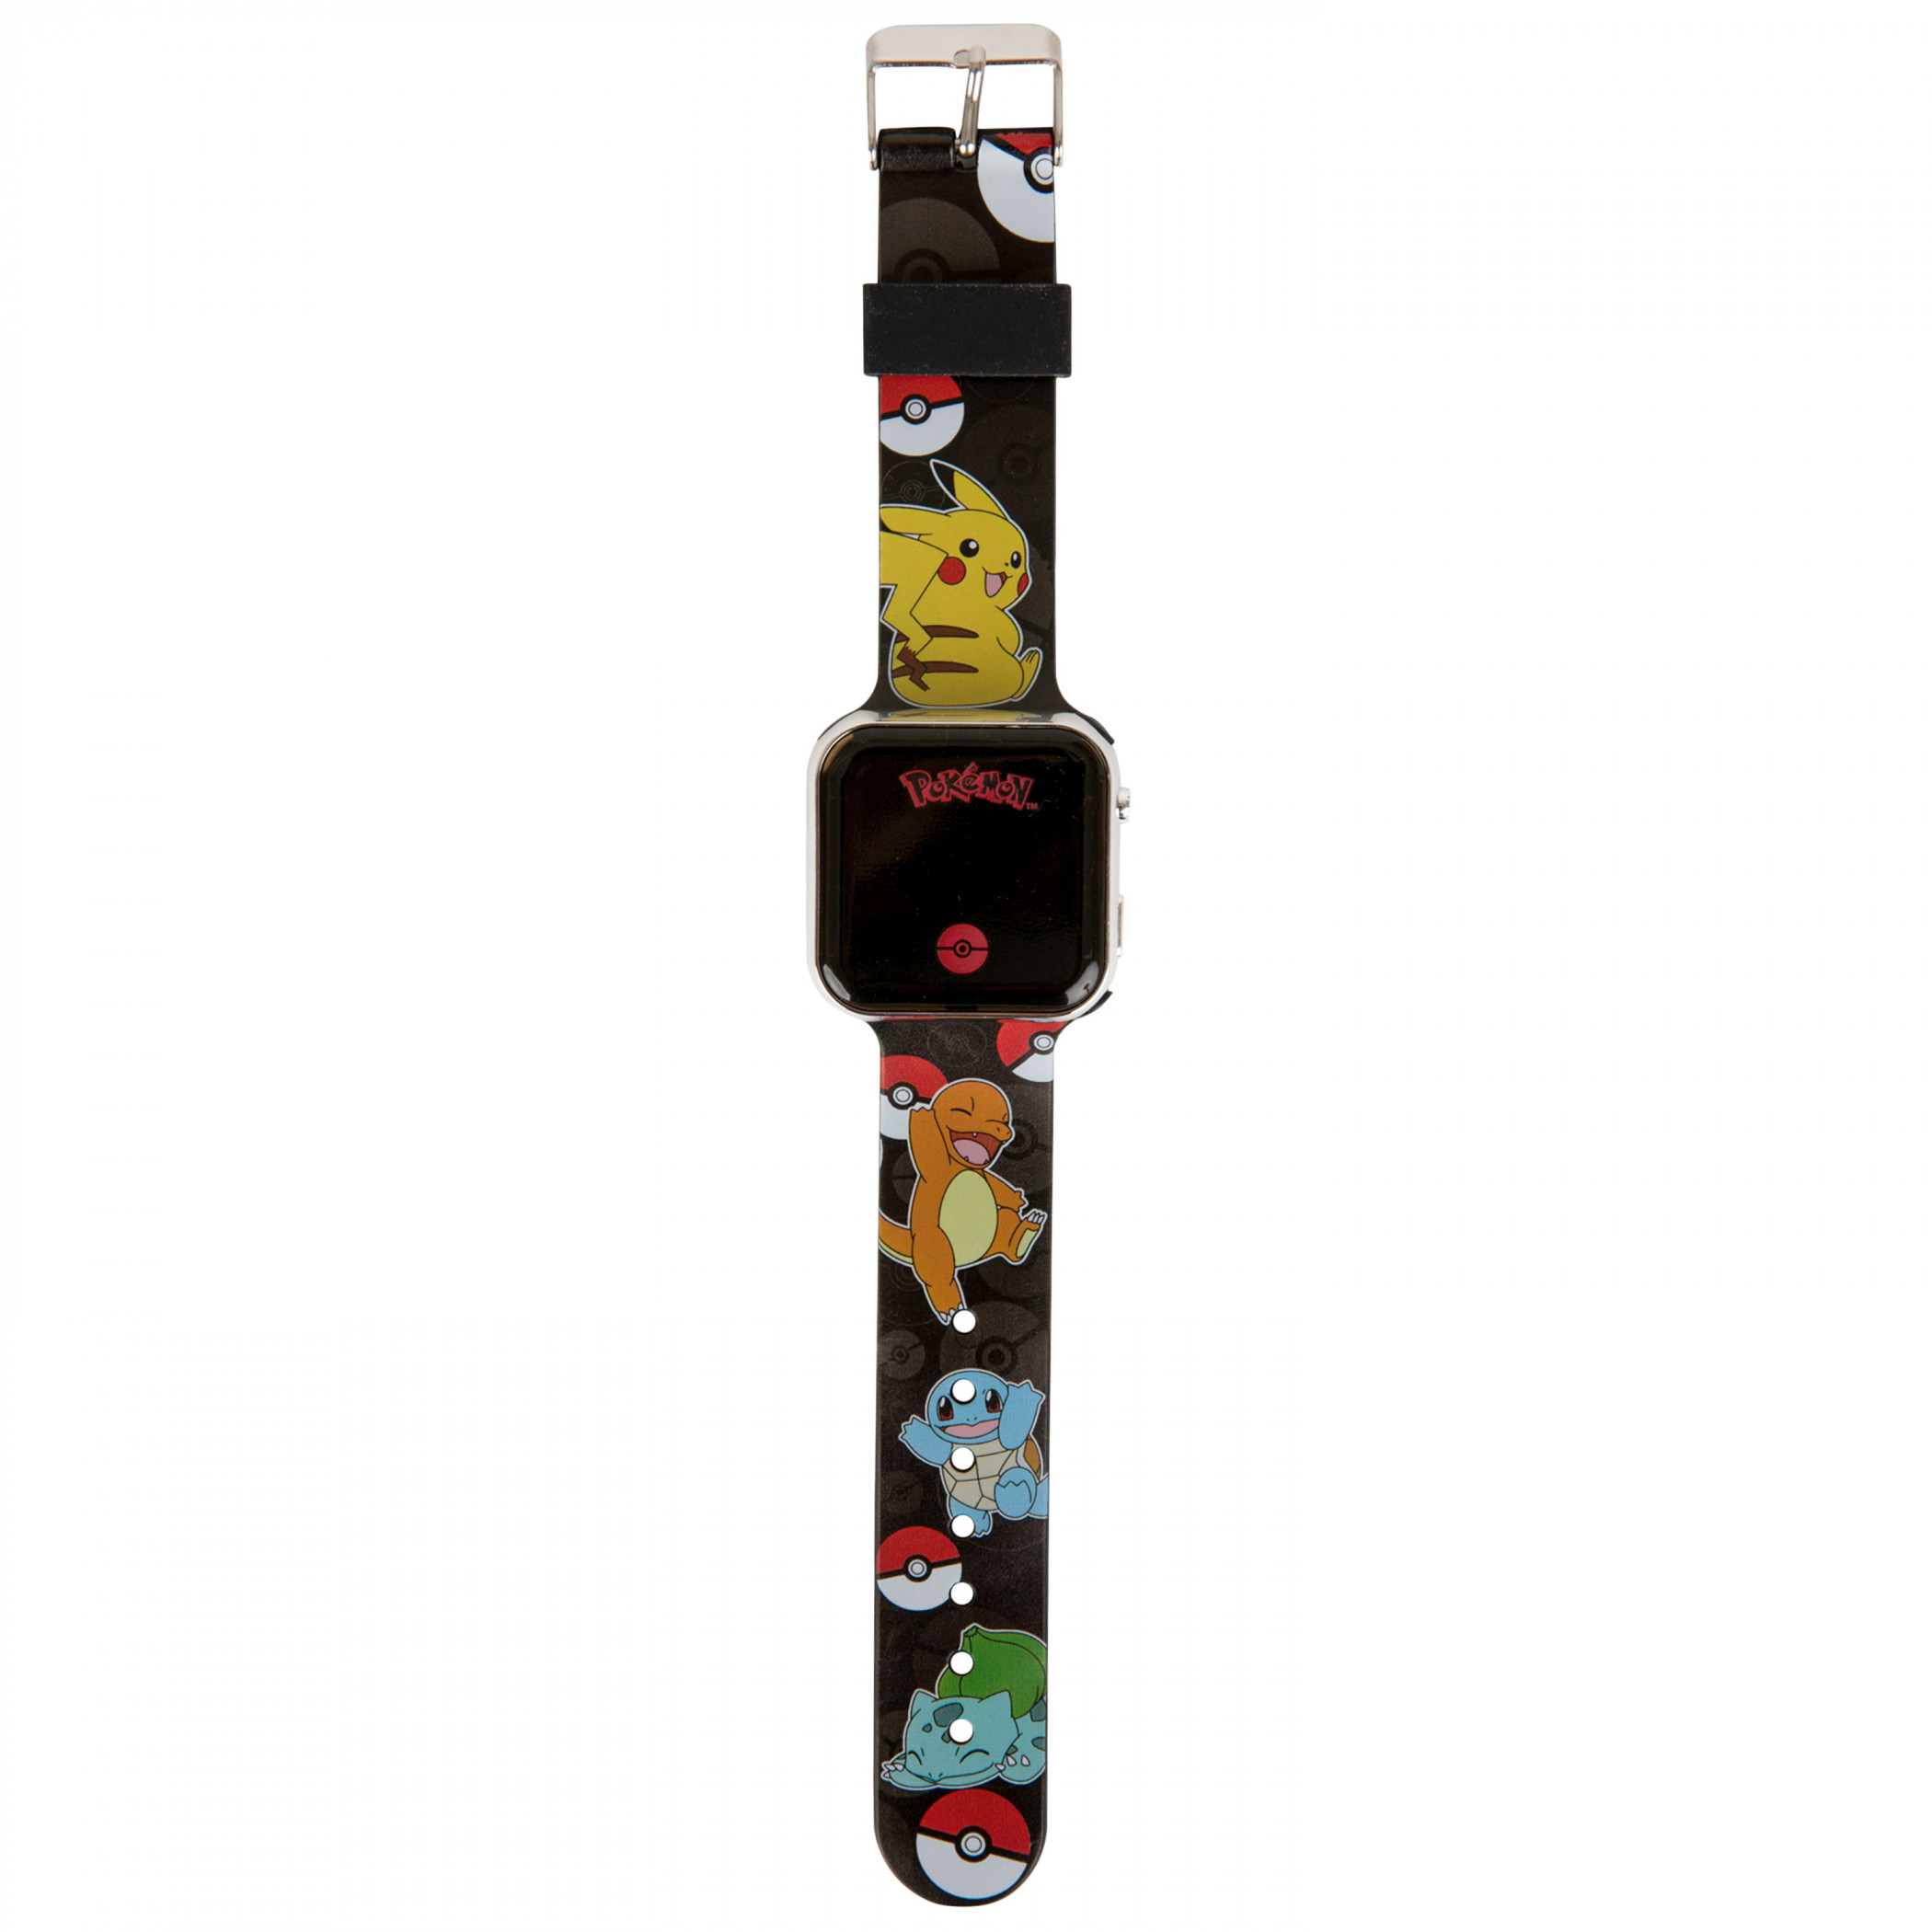 Pokemon Charmander and Pikachu LED Kids Digital Wrist Watch